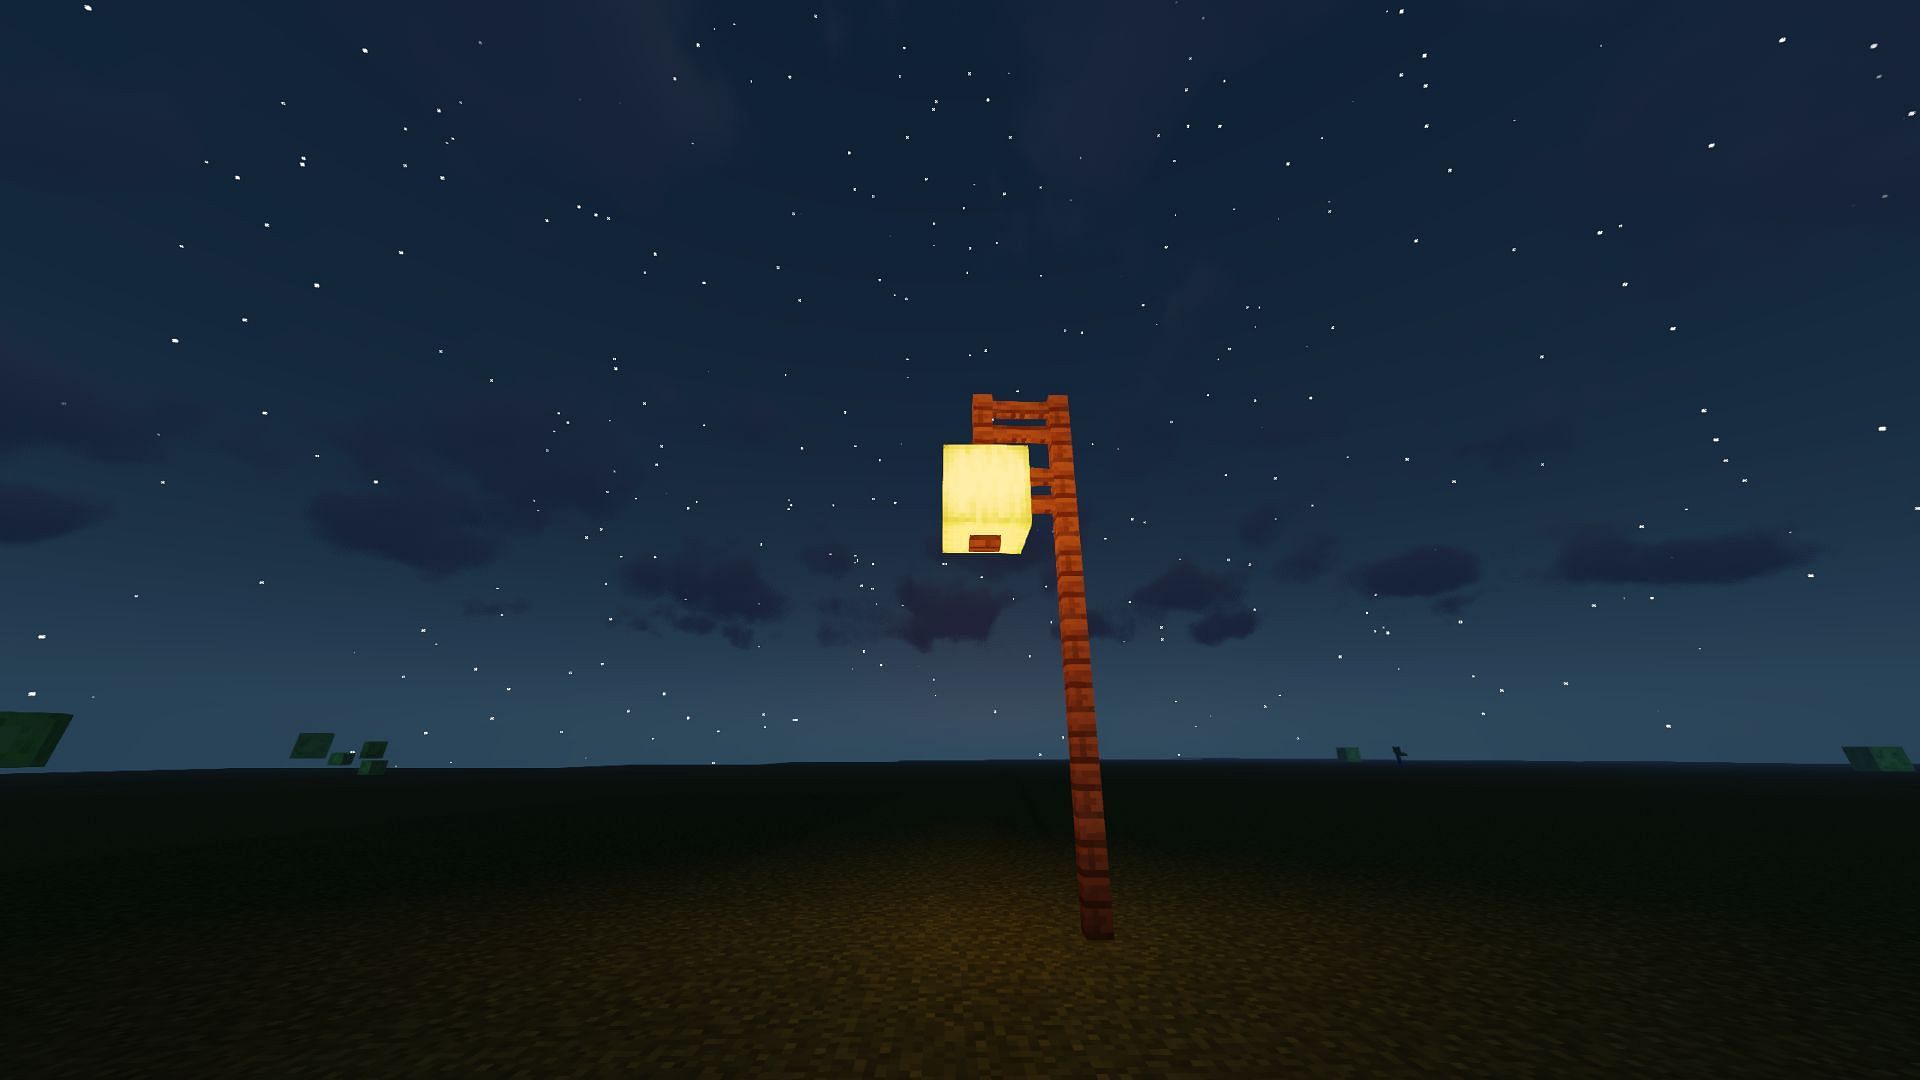 The paper lantern design in Minecraft (Image via Mojang)